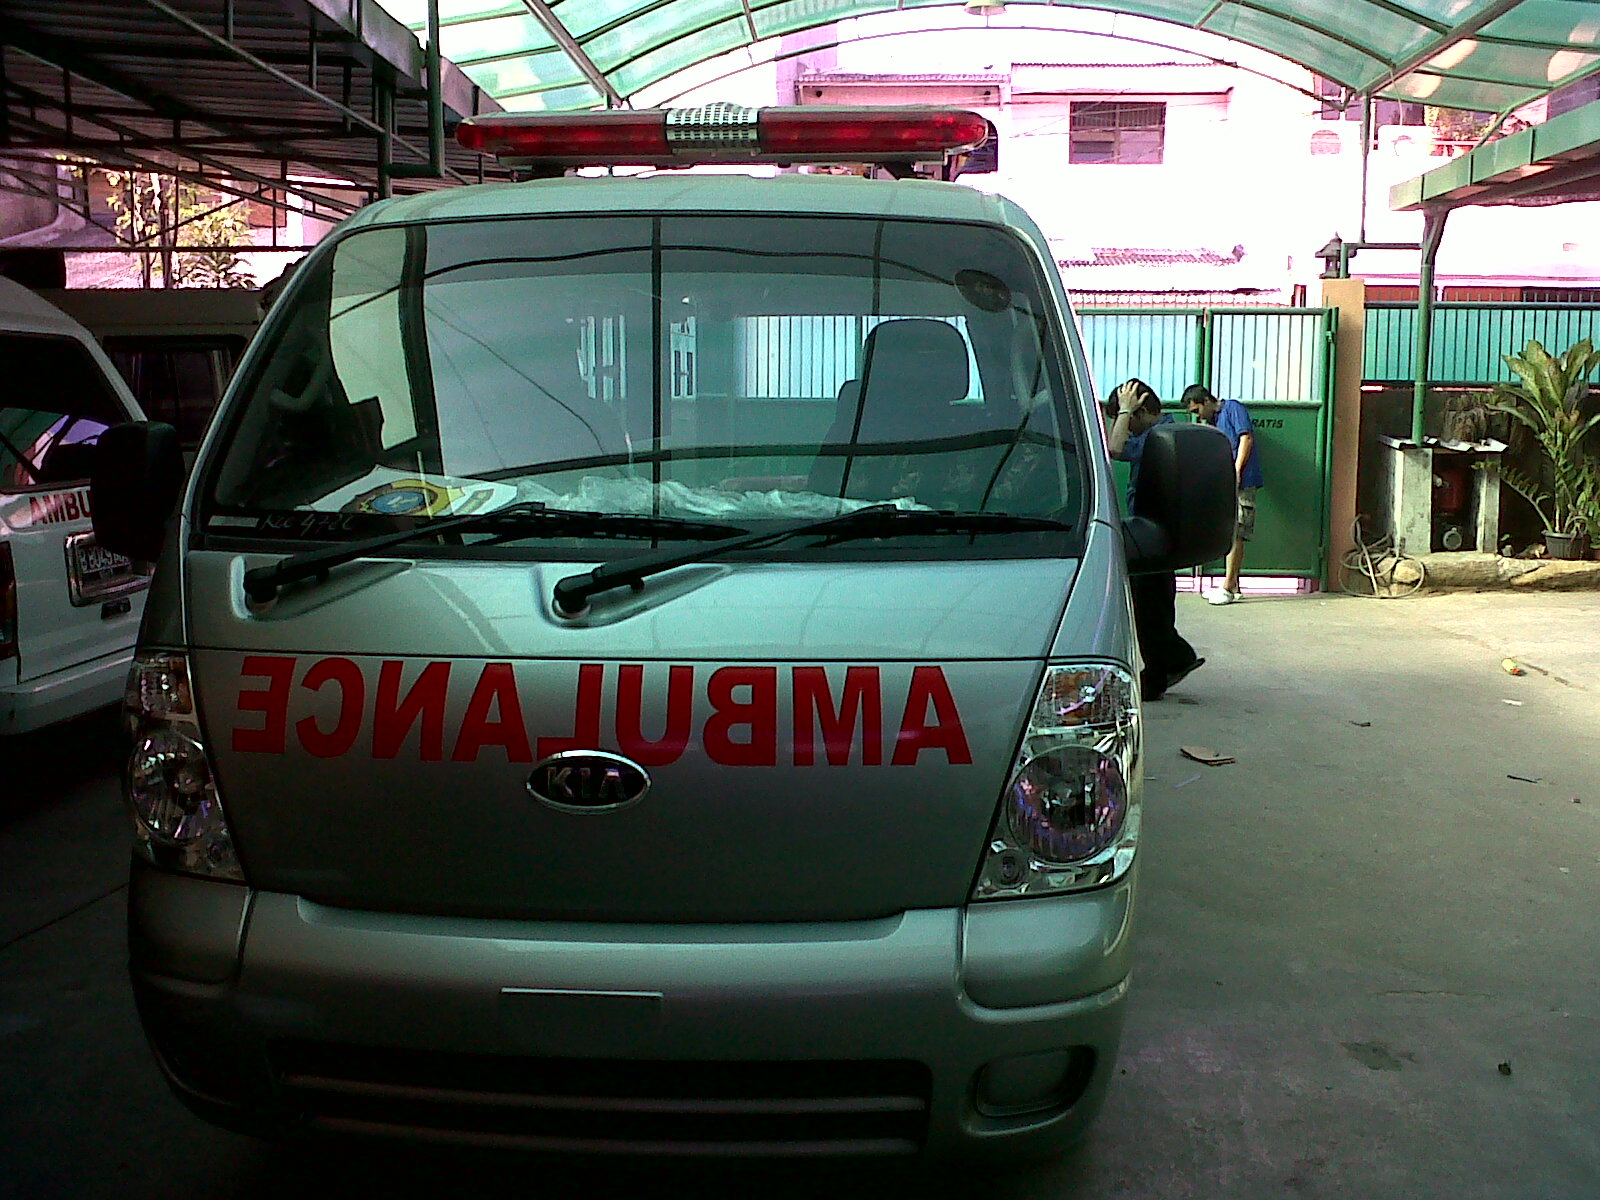 Jual Ambulance Juni 2010